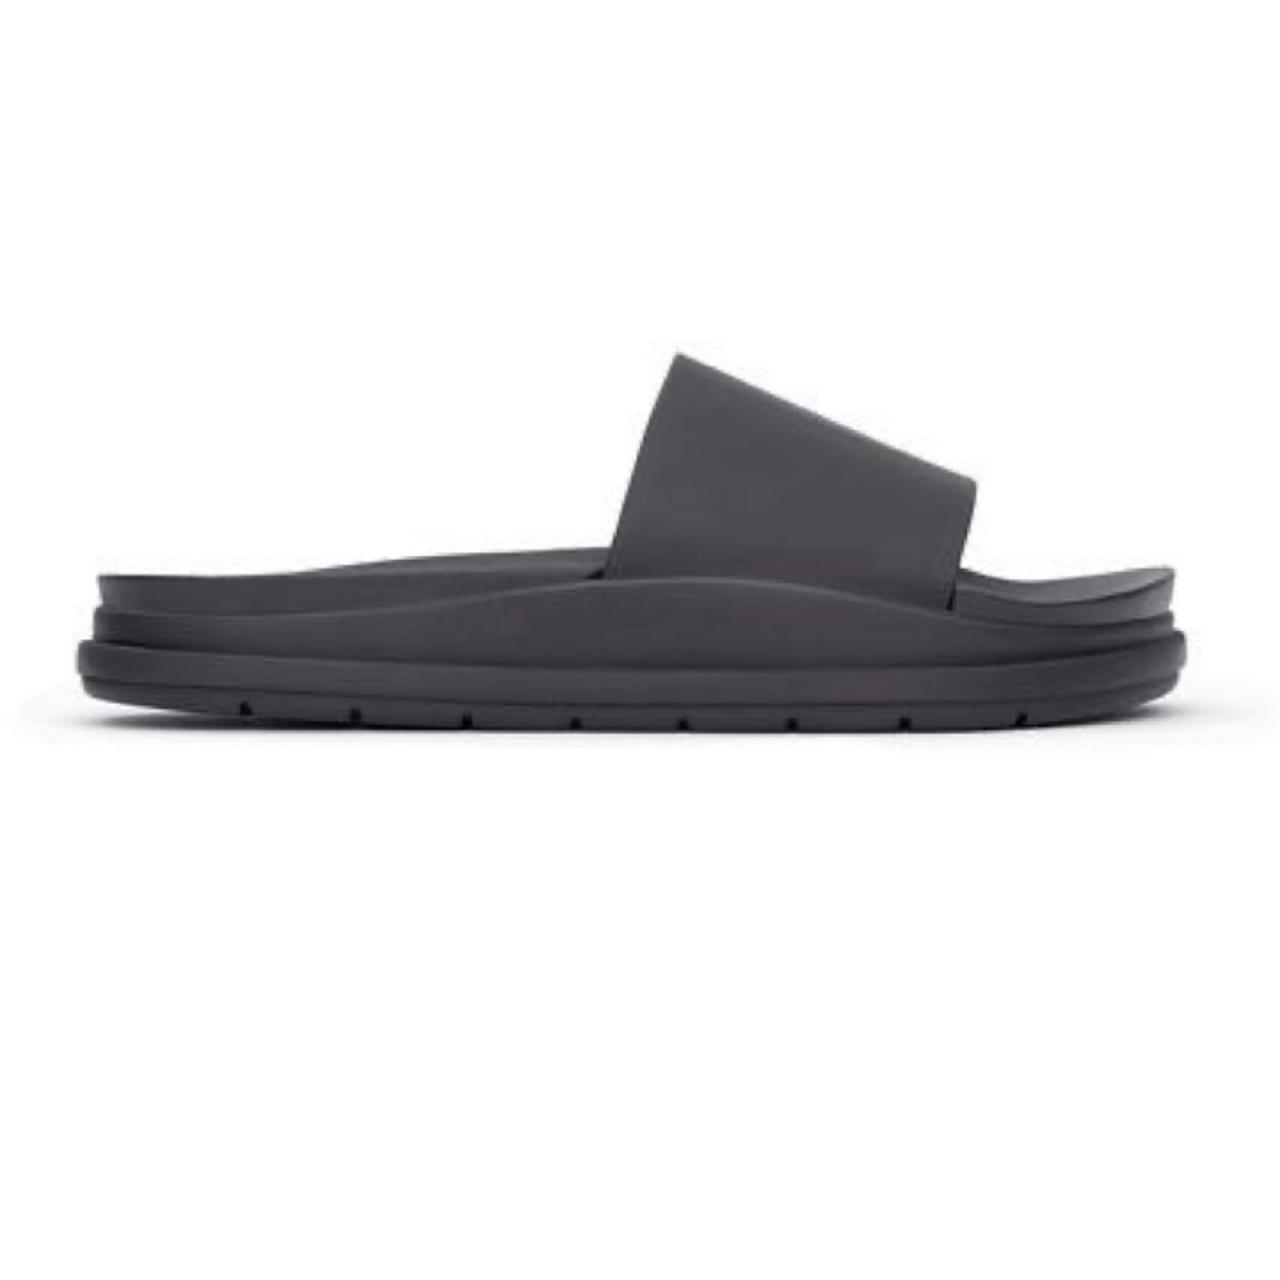 ALEXANDER WANG x H&M black slide sandals. These sold... - Depop